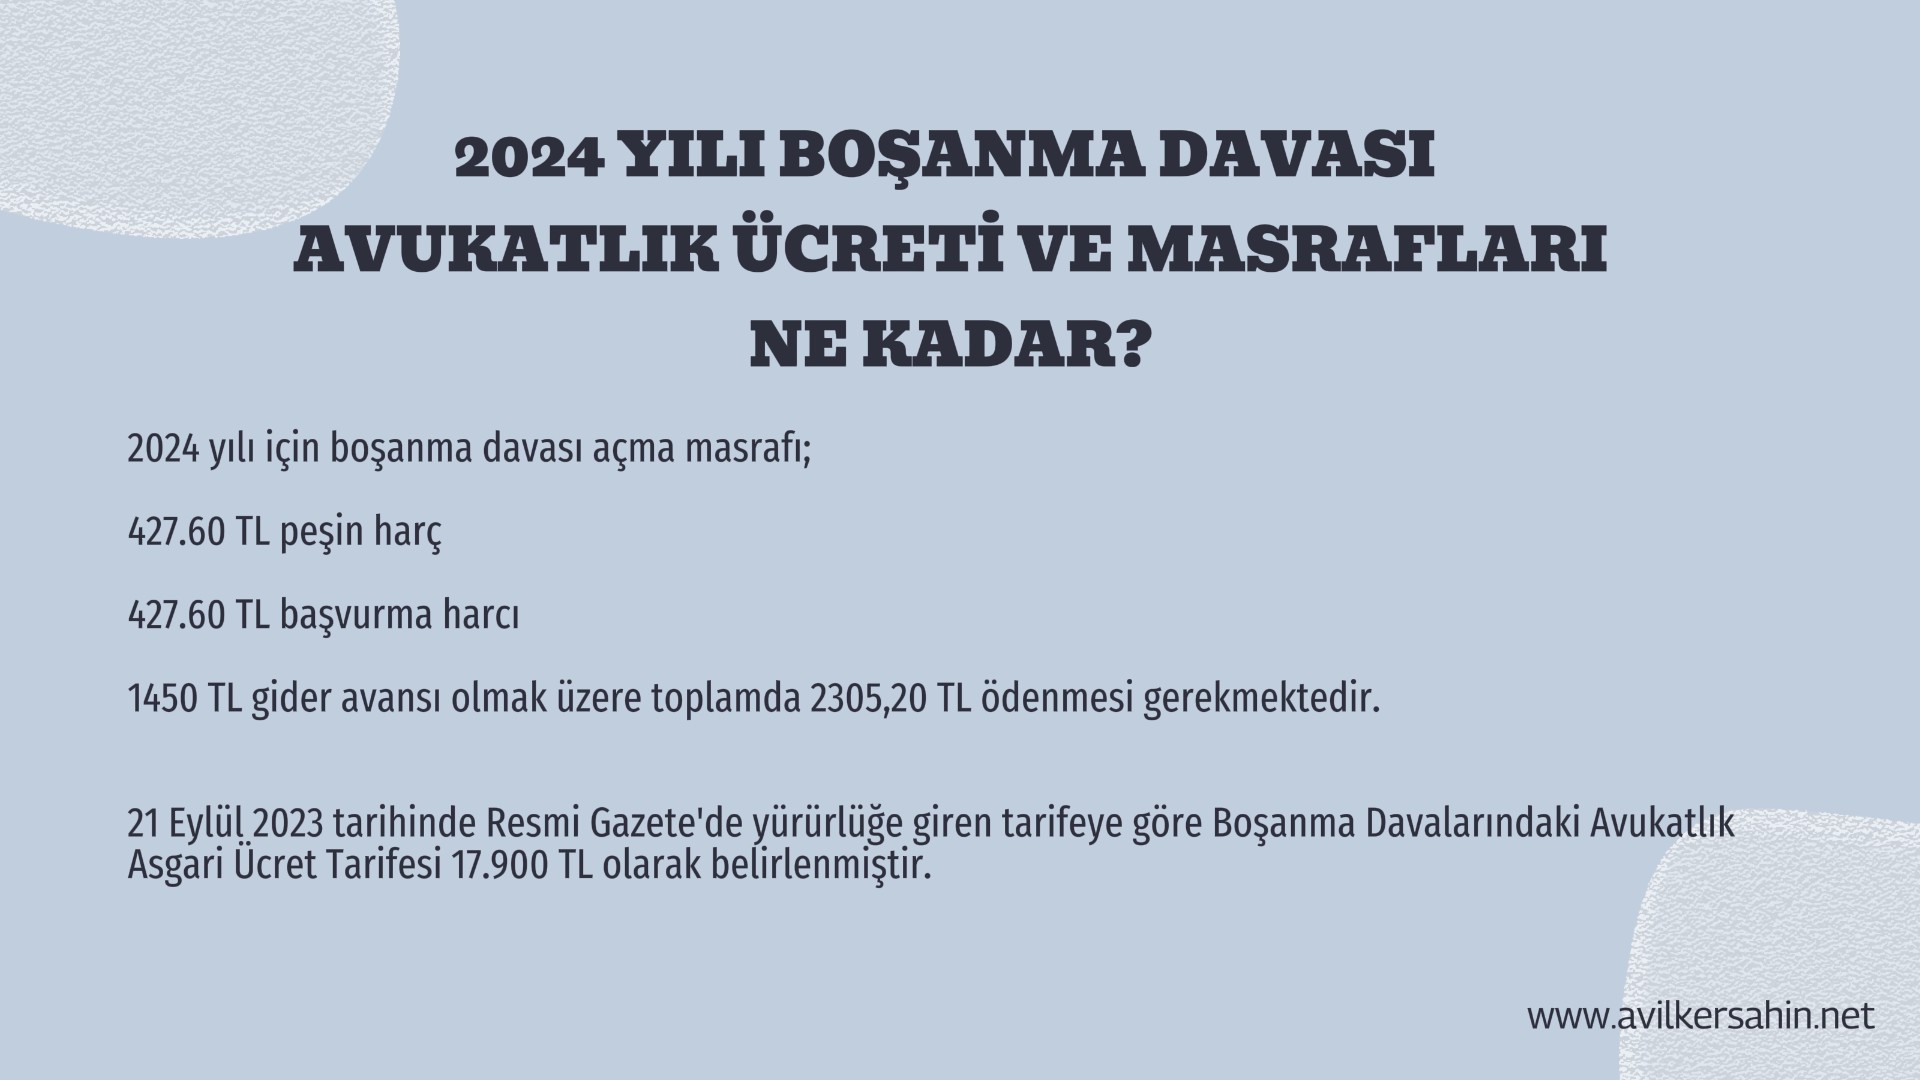 2024_bosanma_masrafi_avukatlik_ucreti_samsun_bosanma_avukati.jpeg (1920×1080)